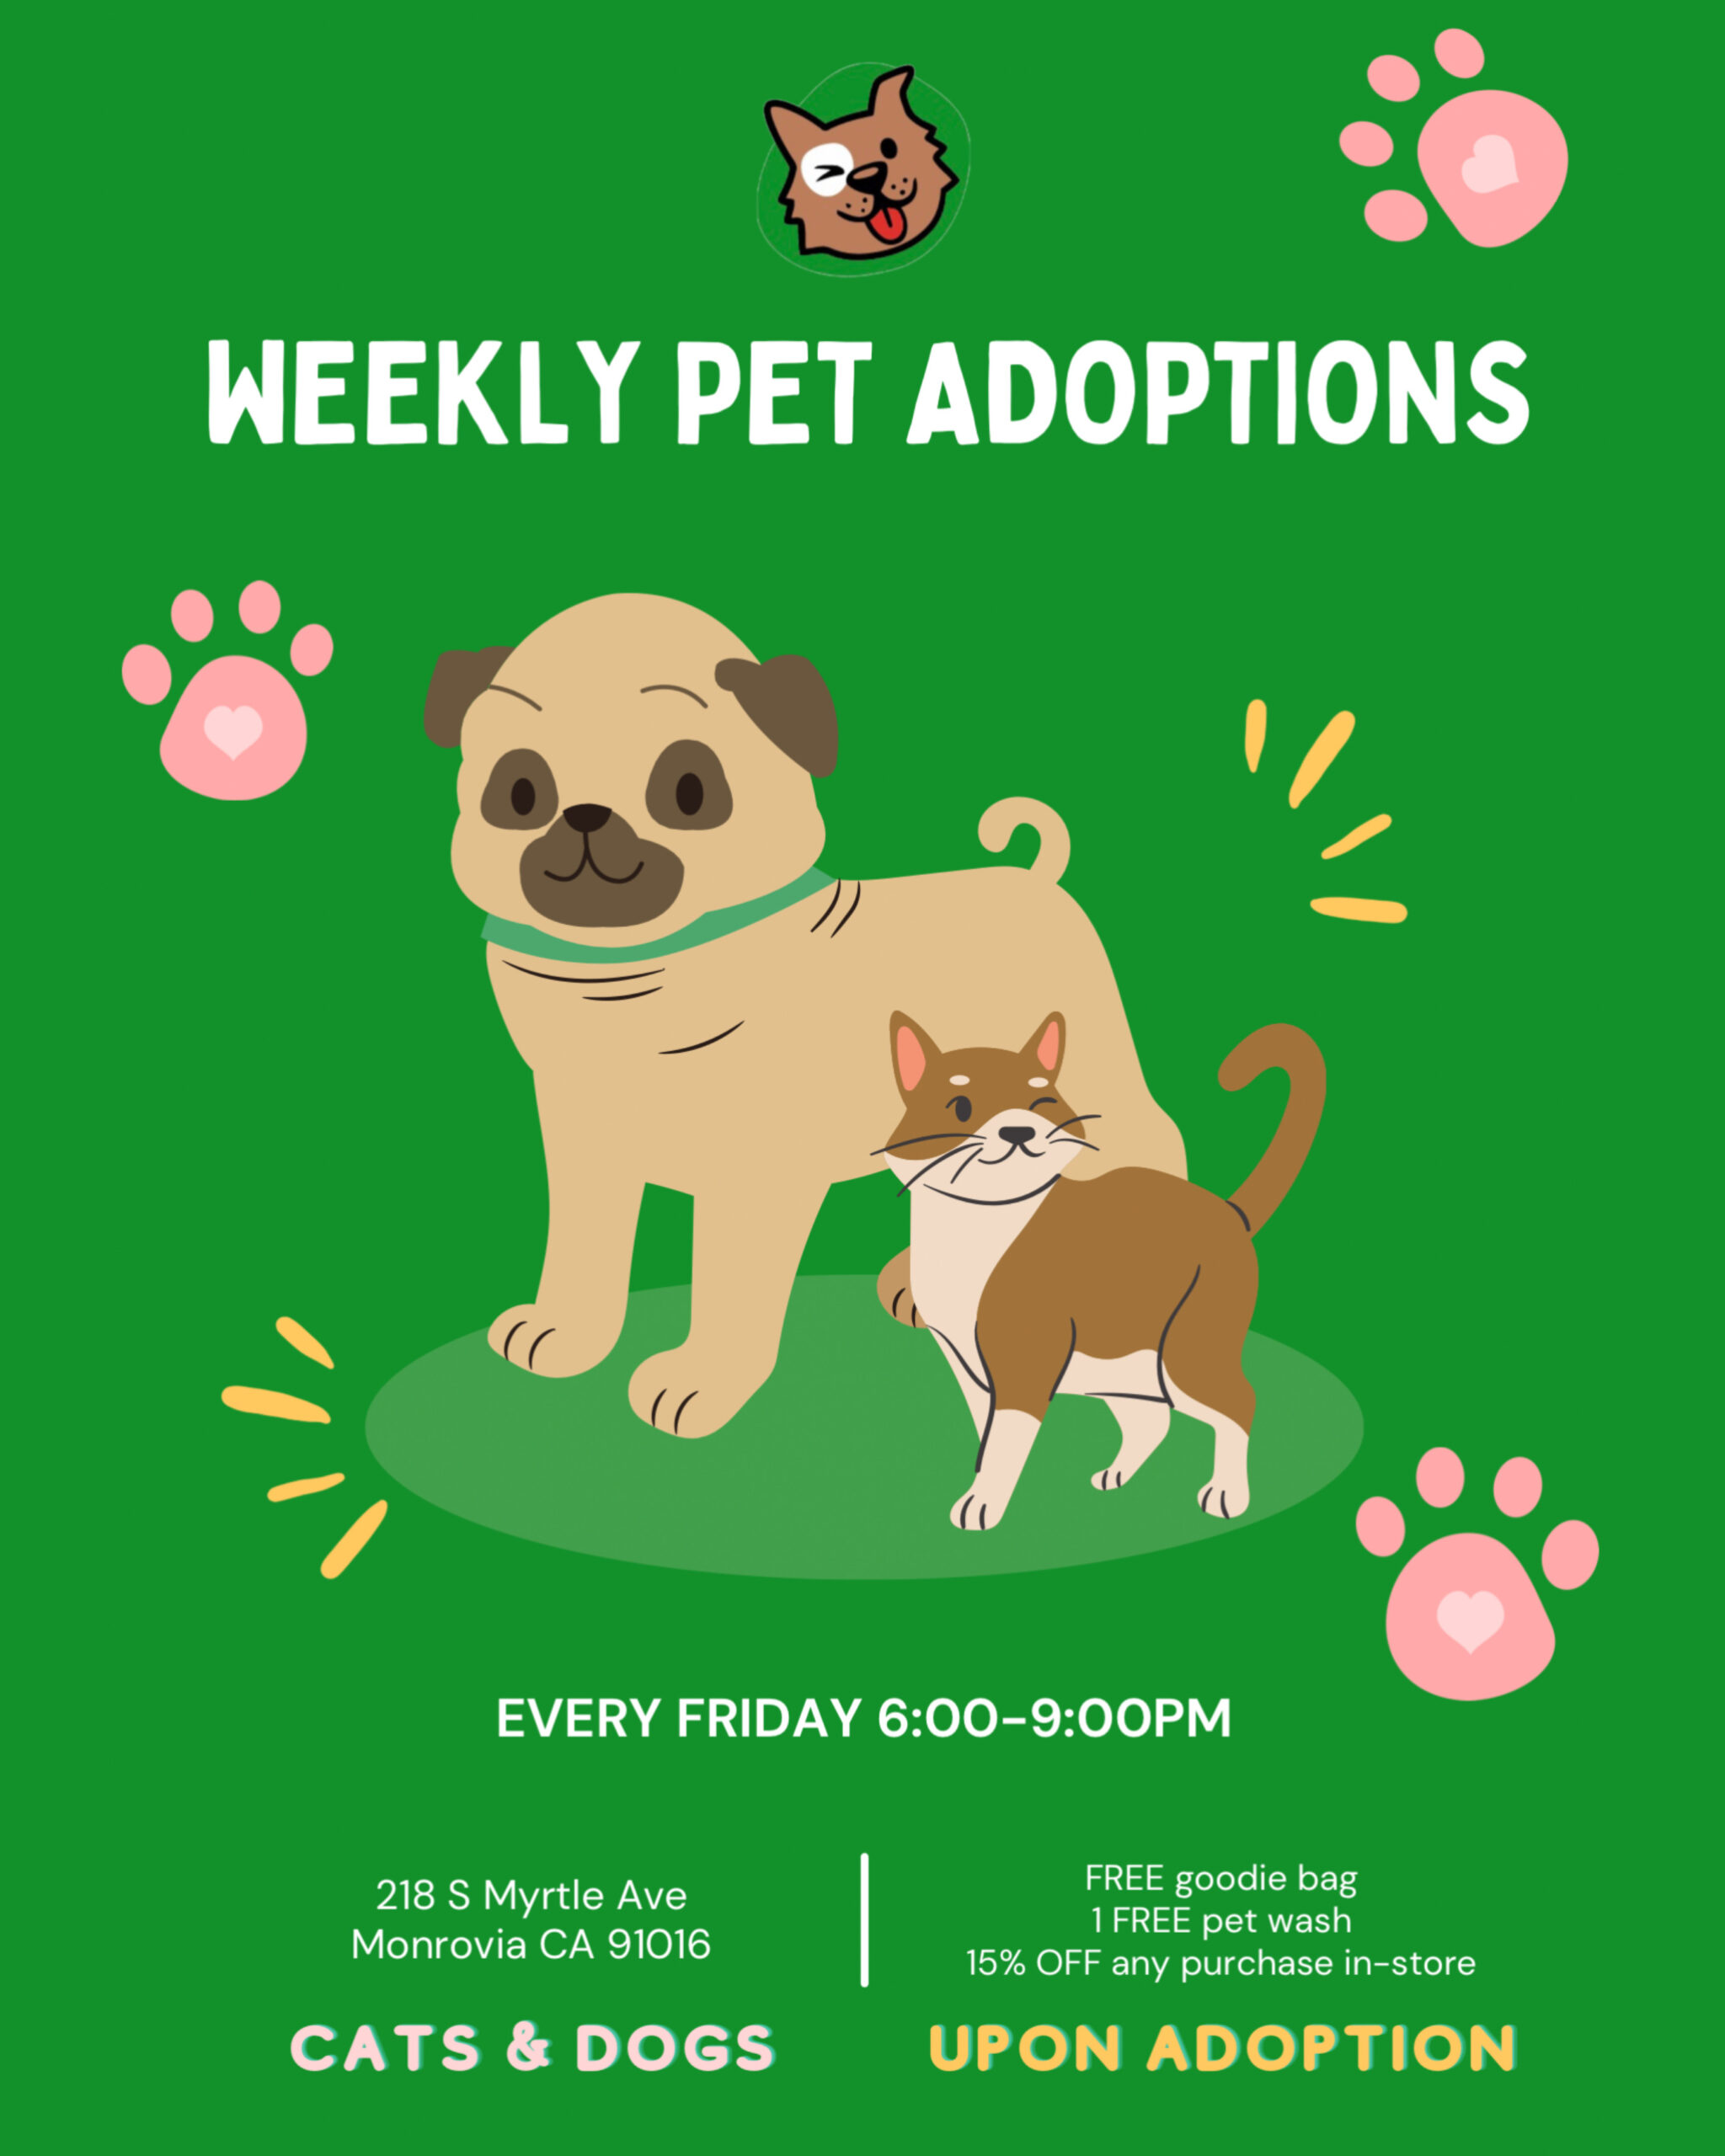 weekly adoption events at Pet N Mind Monrovia 